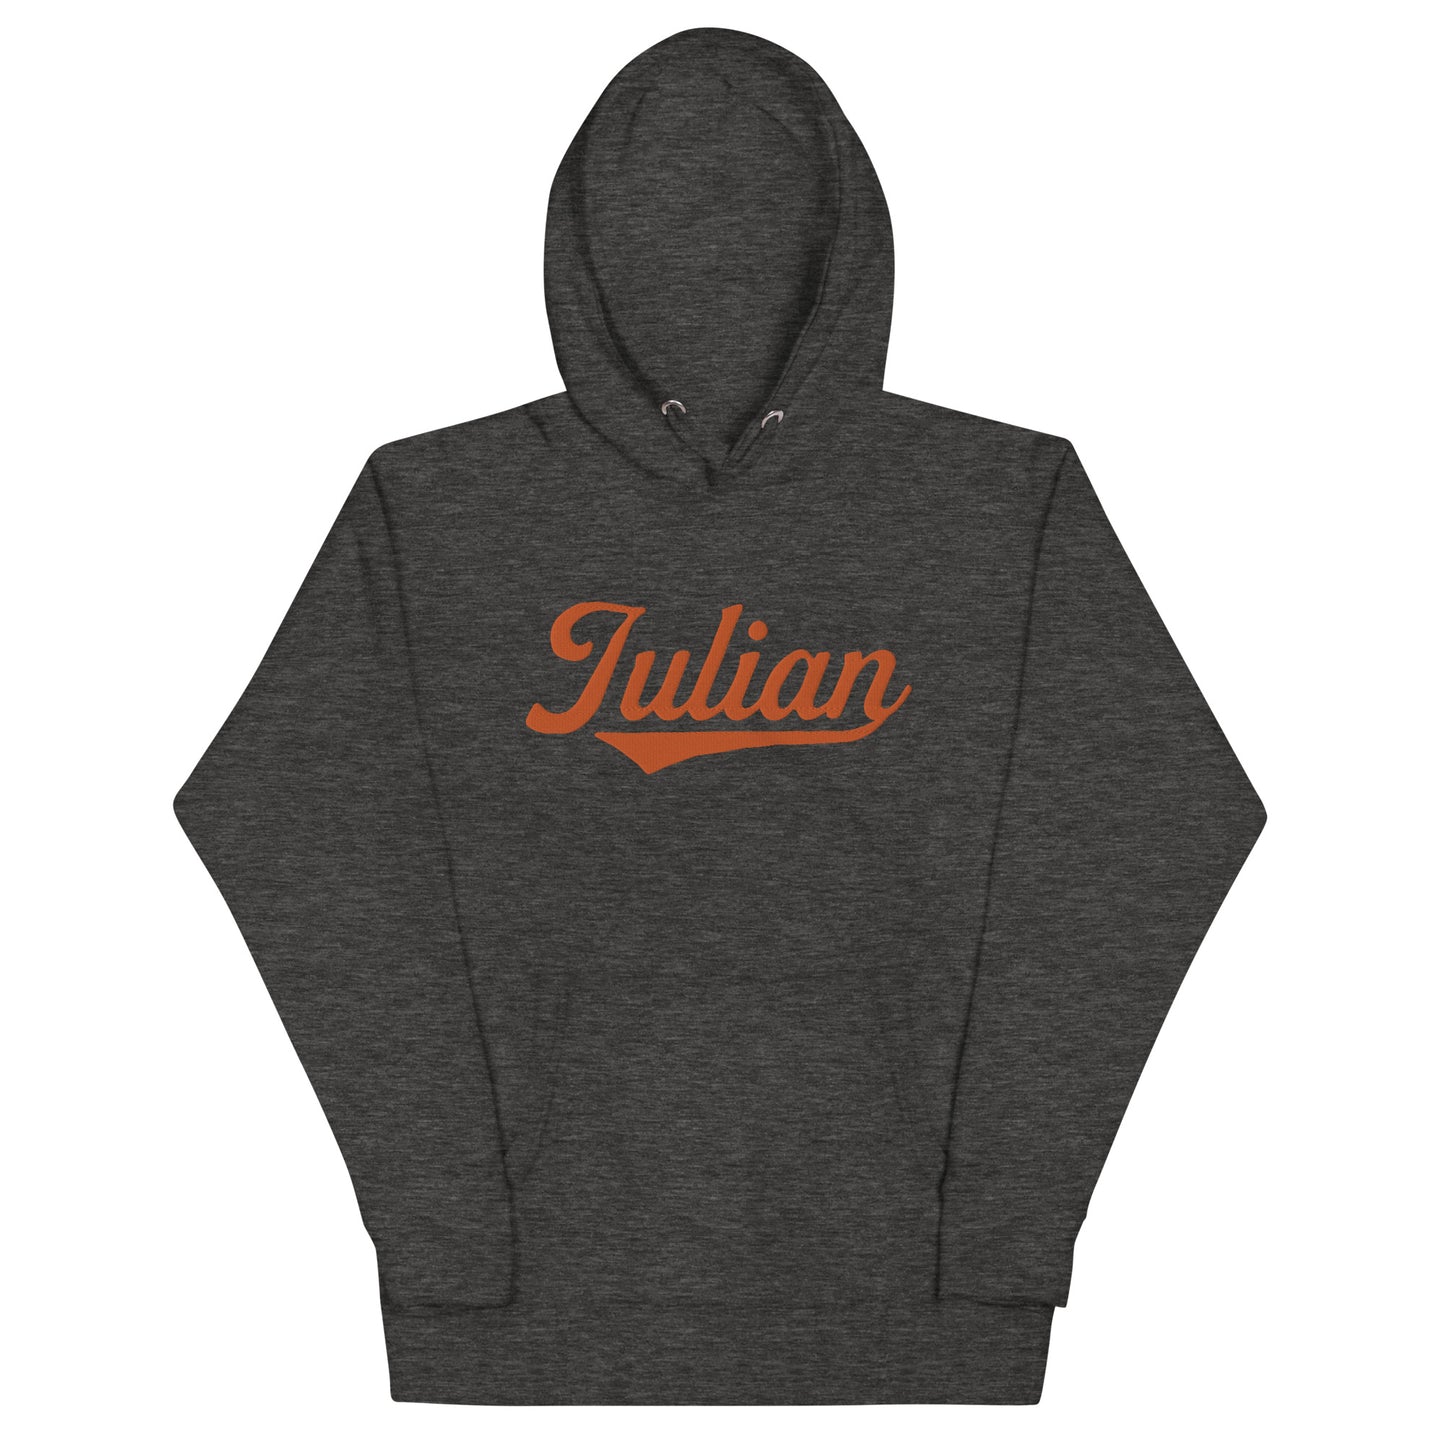 Embroidered Julian Hoodie | Julian Jaguars